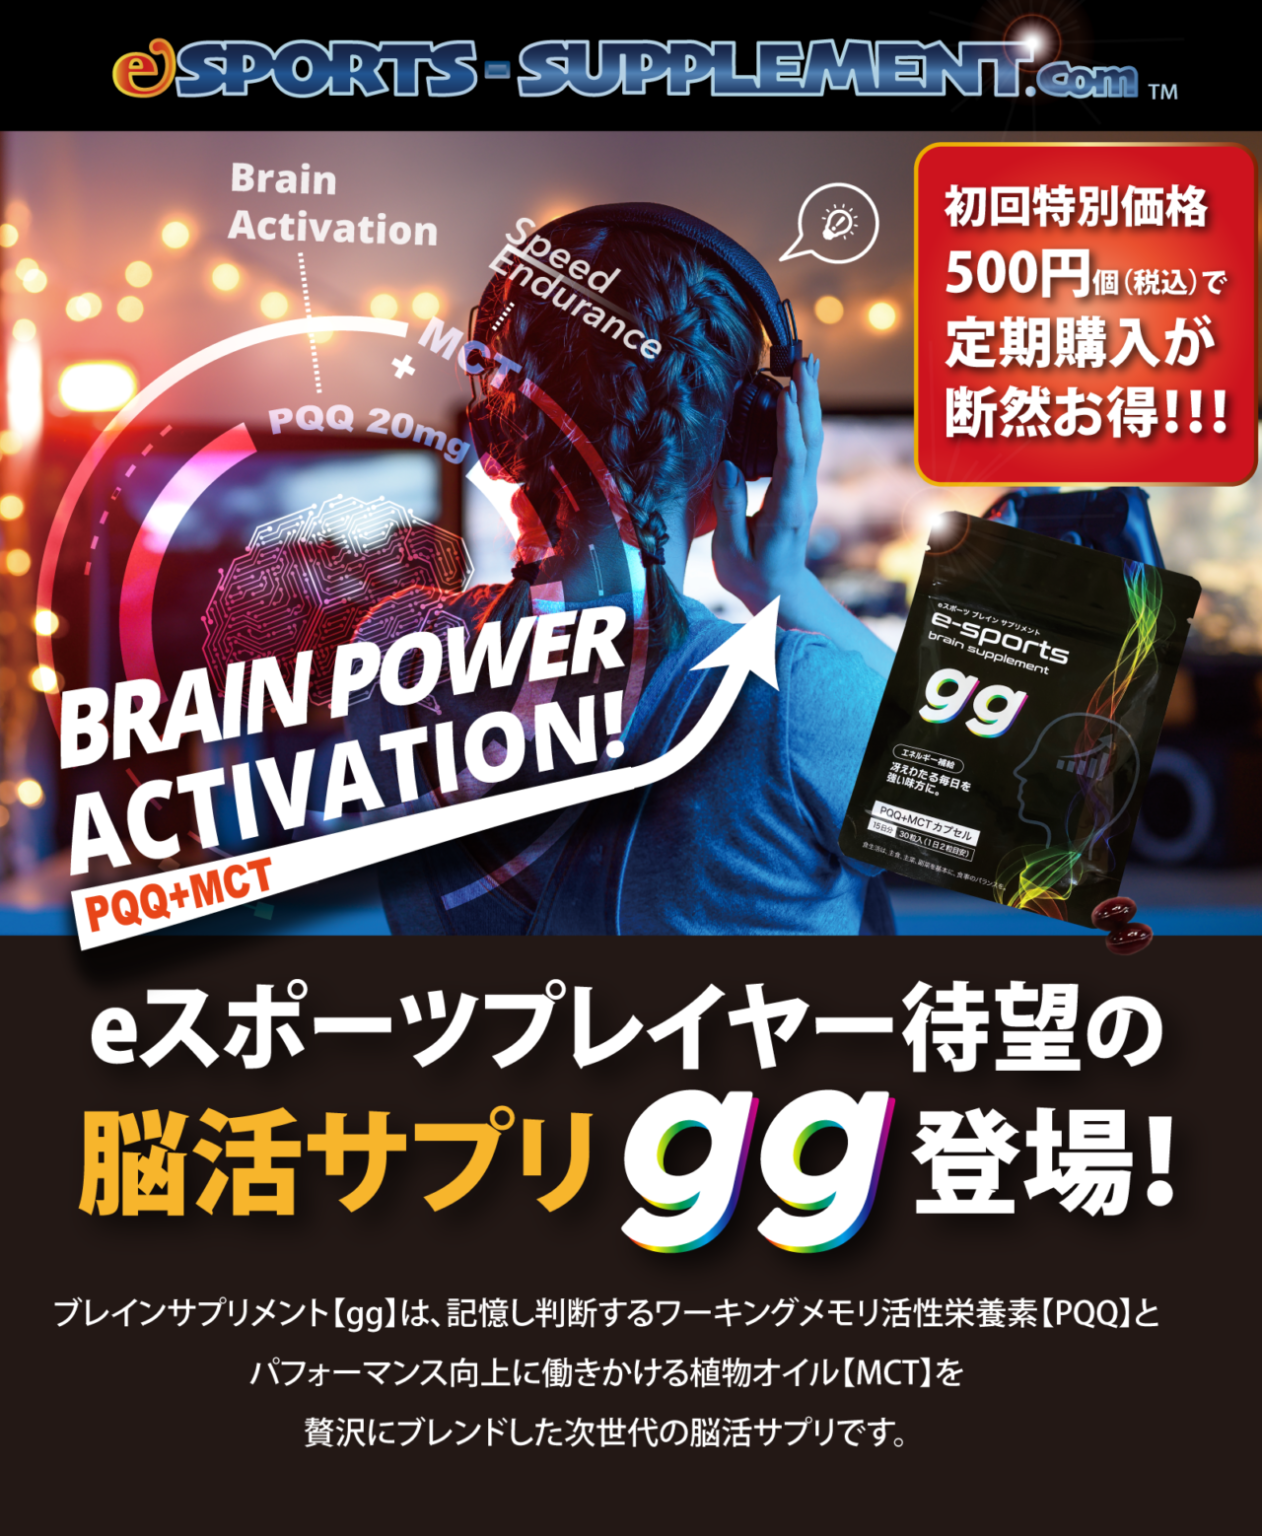 eスポーツプレイヤー待望の脳活サプリメント「gg」登場、定期購入は初回特別価格500円で断然お得